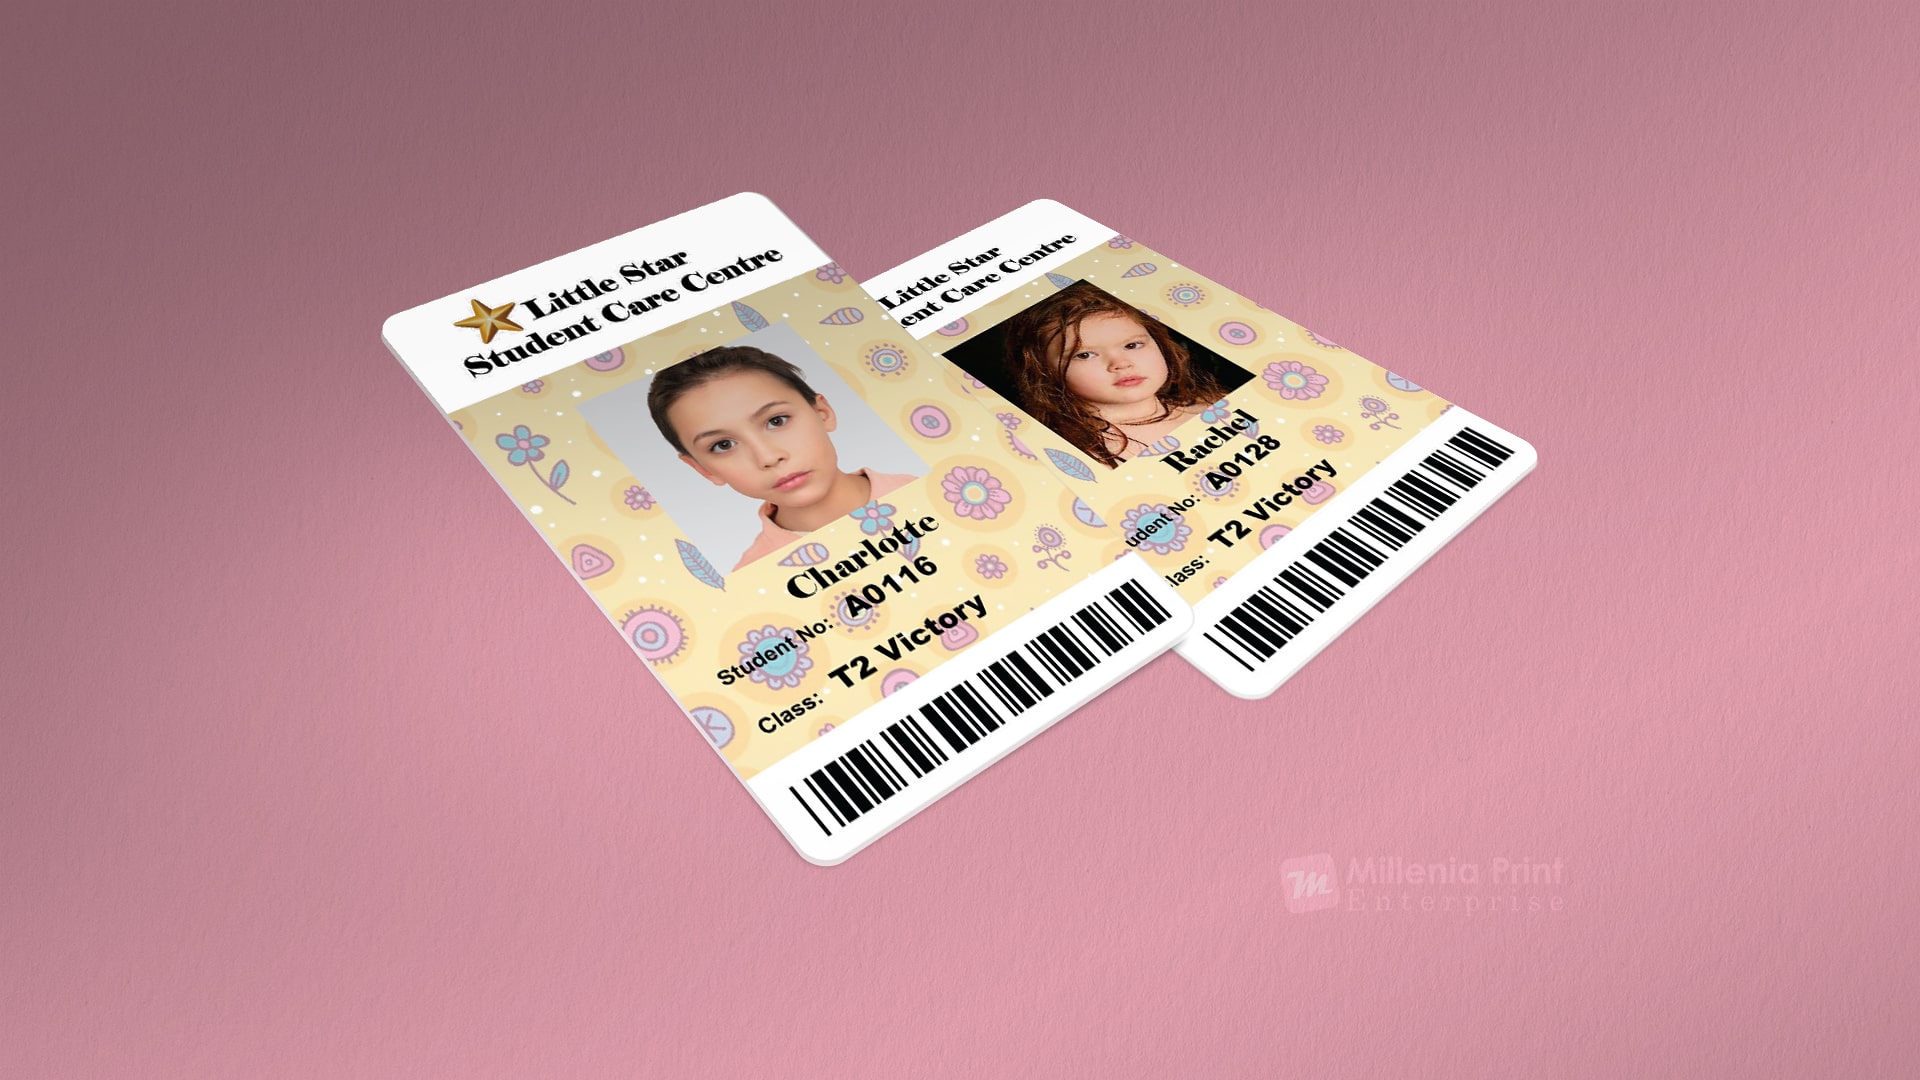 Student Photo ID Card